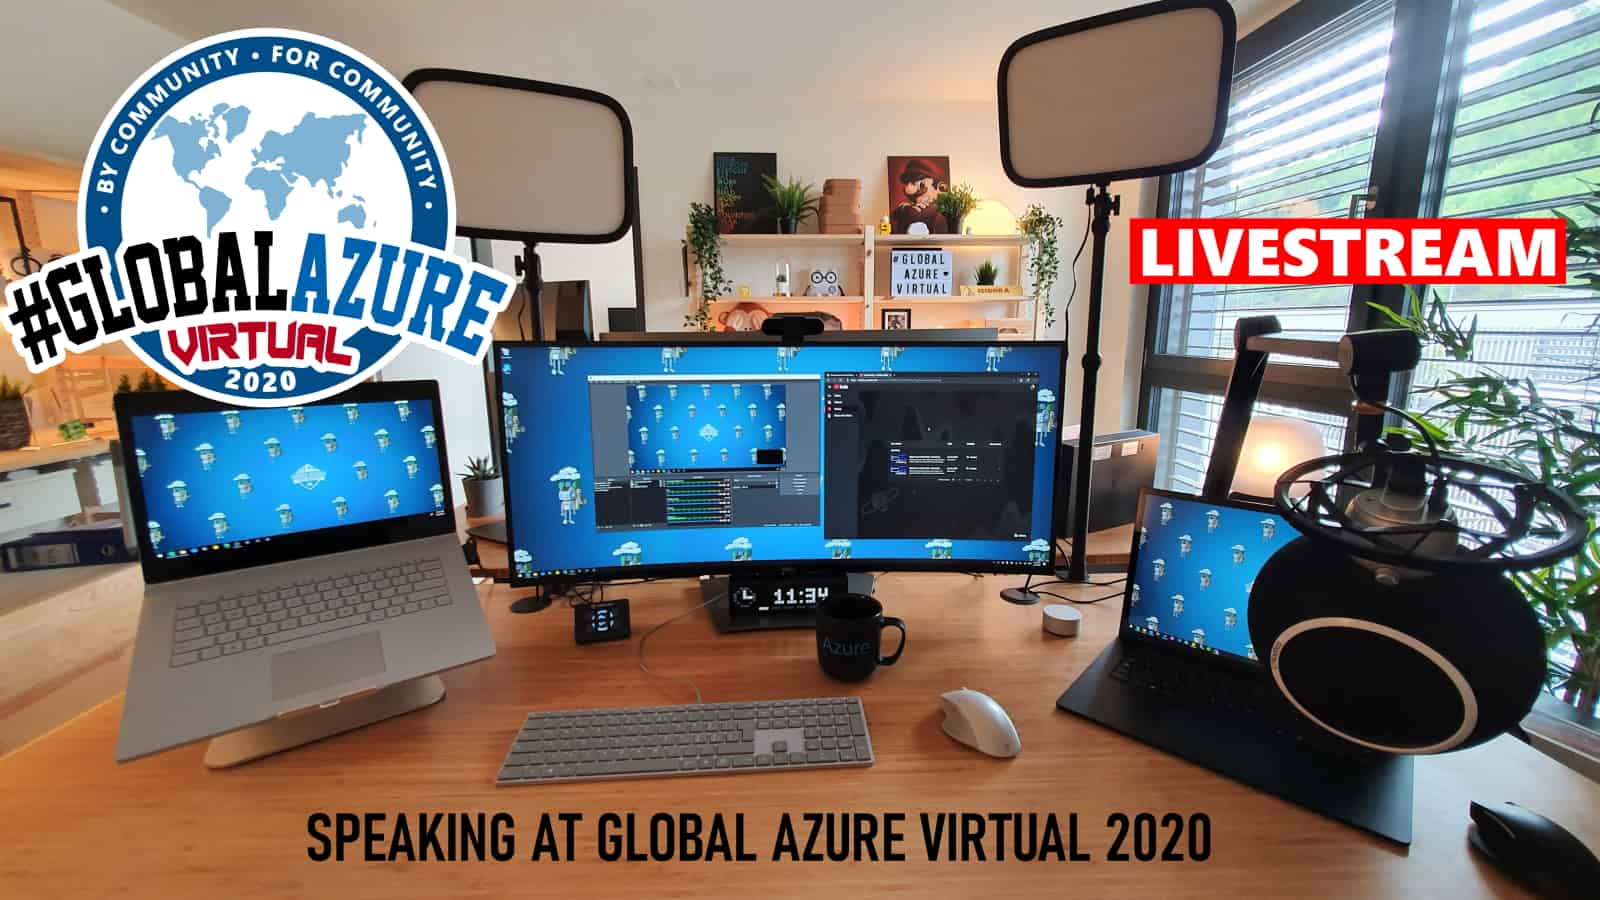 Speaking at Global Azure Virtual 2020 Livestream